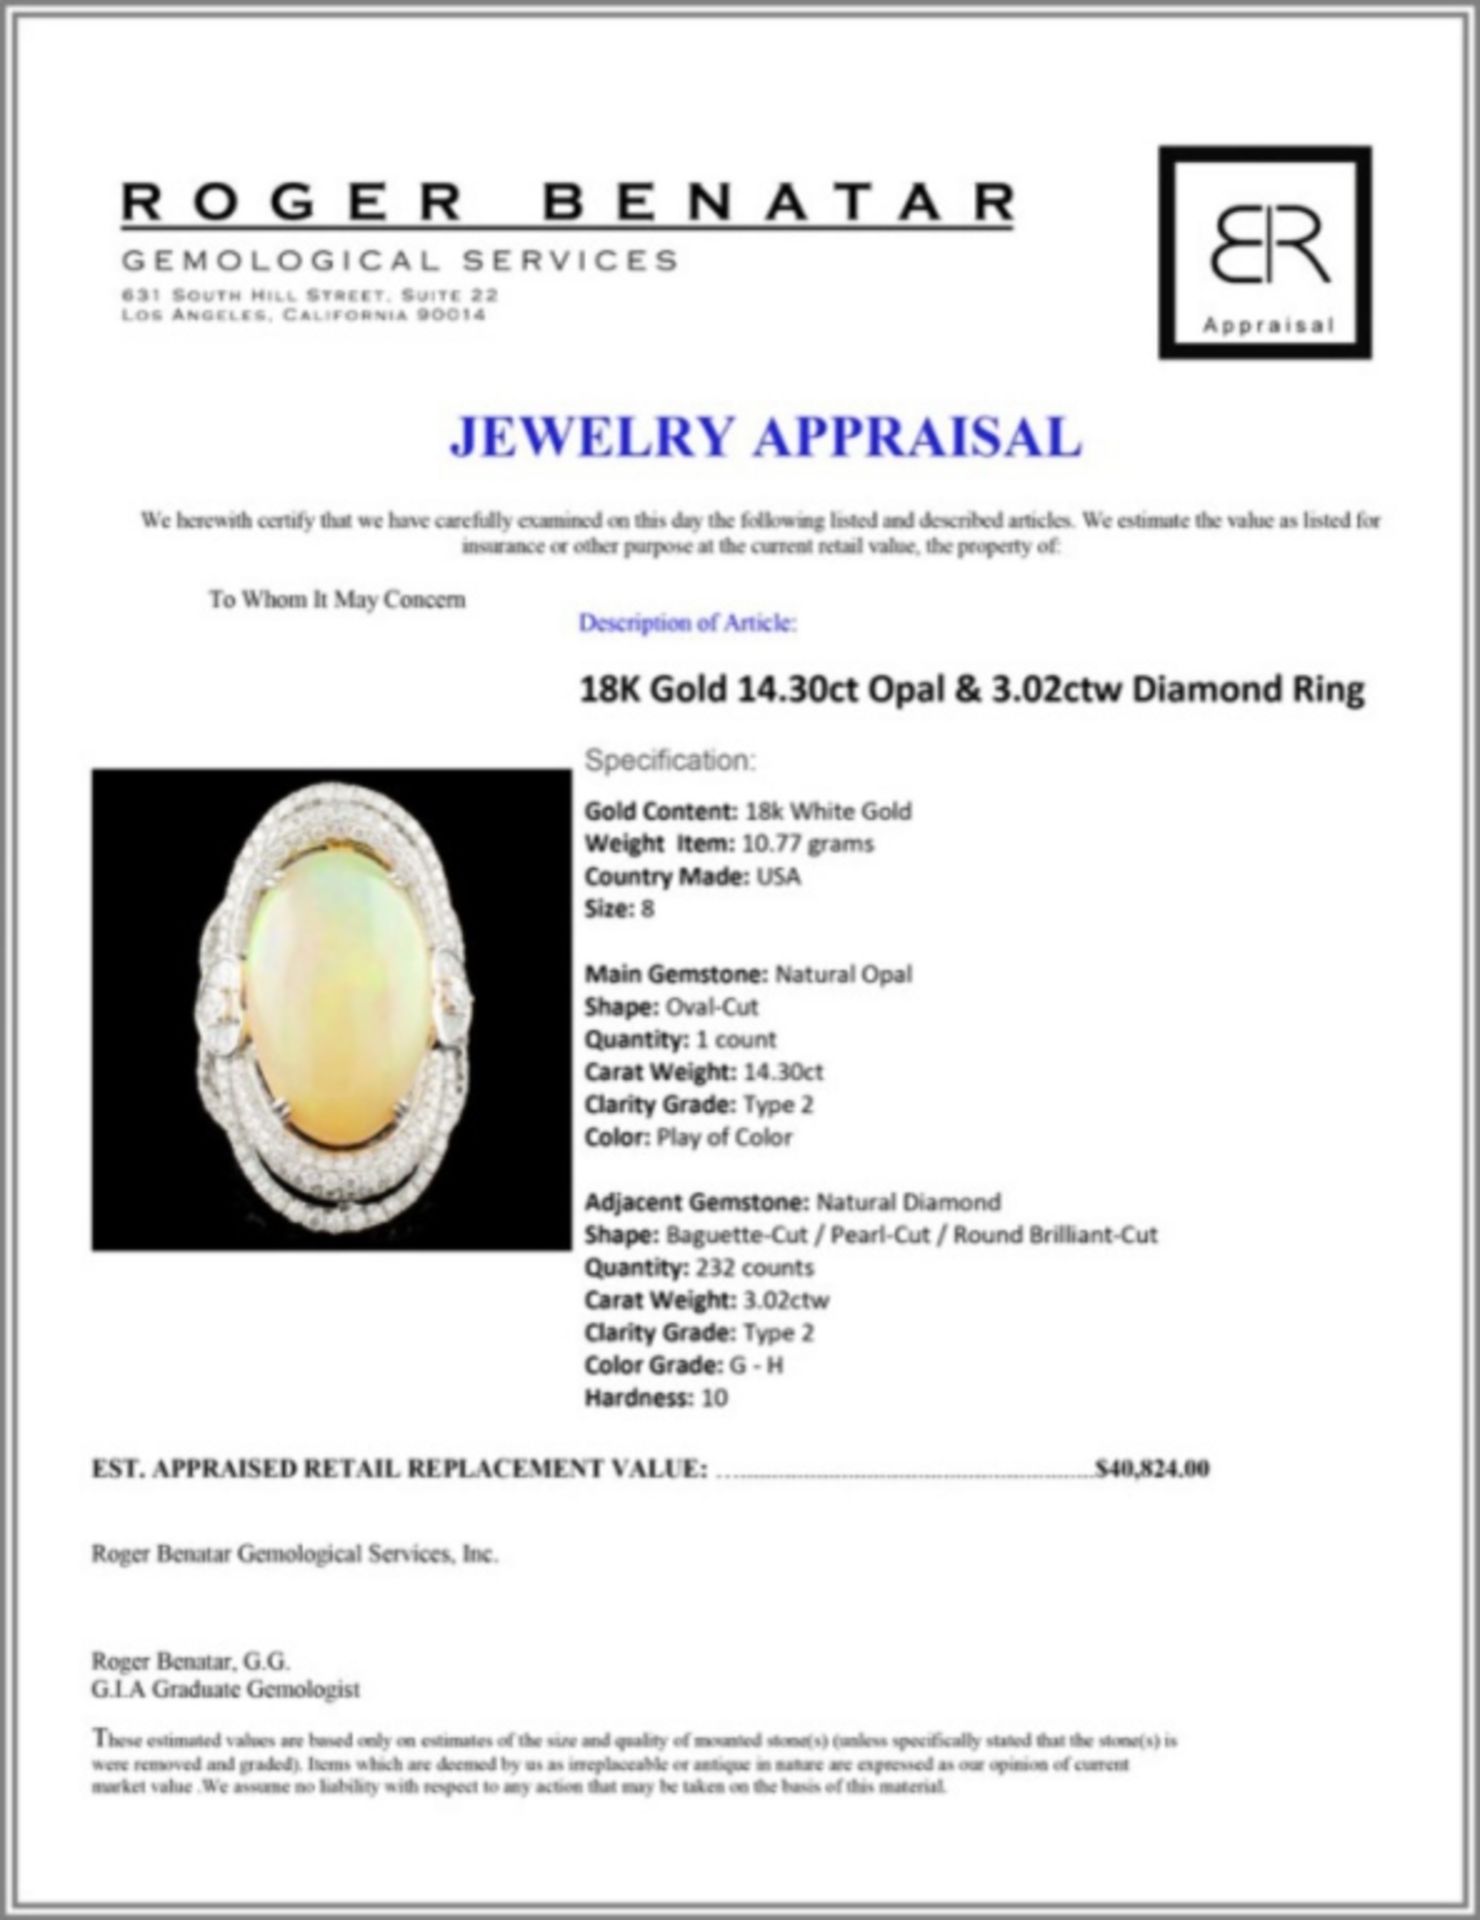 18K Gold 14.30ct Opal & 3.02ctw Diamond Ring - Image 5 of 5